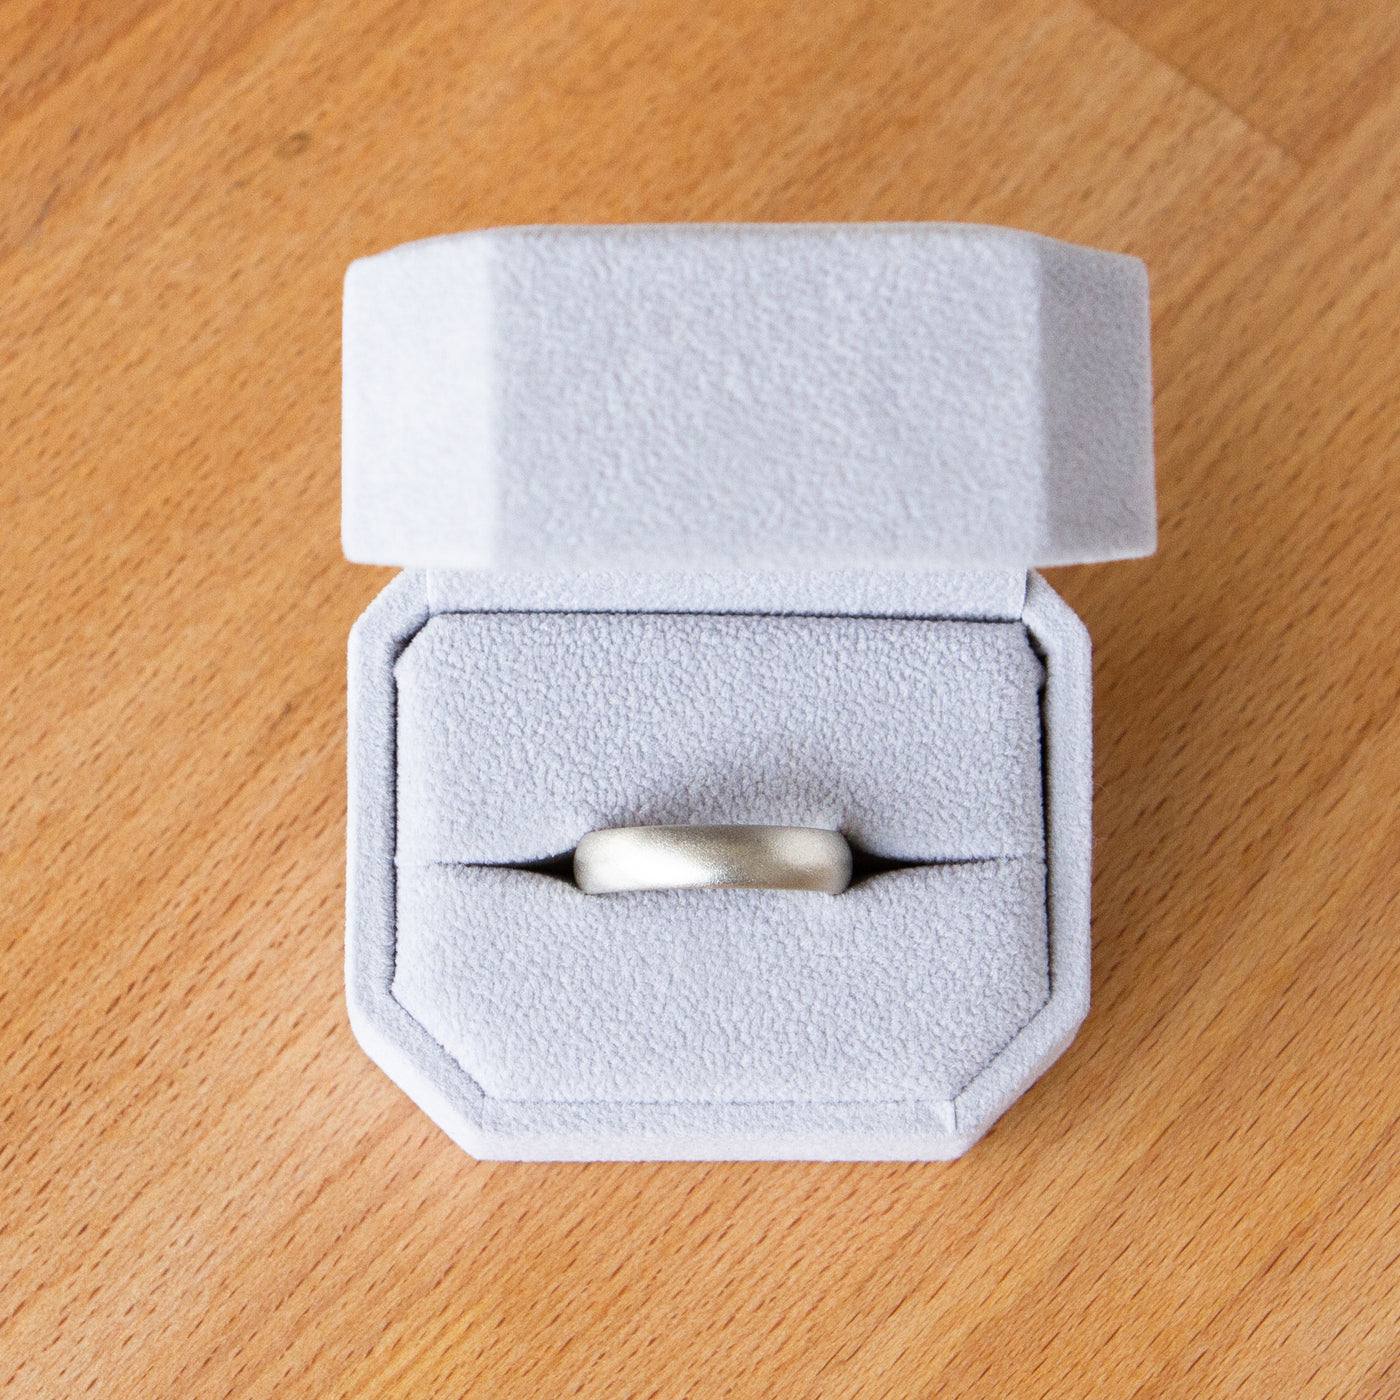 White gold Yosemite half round stippled texture wedding band in a ring box